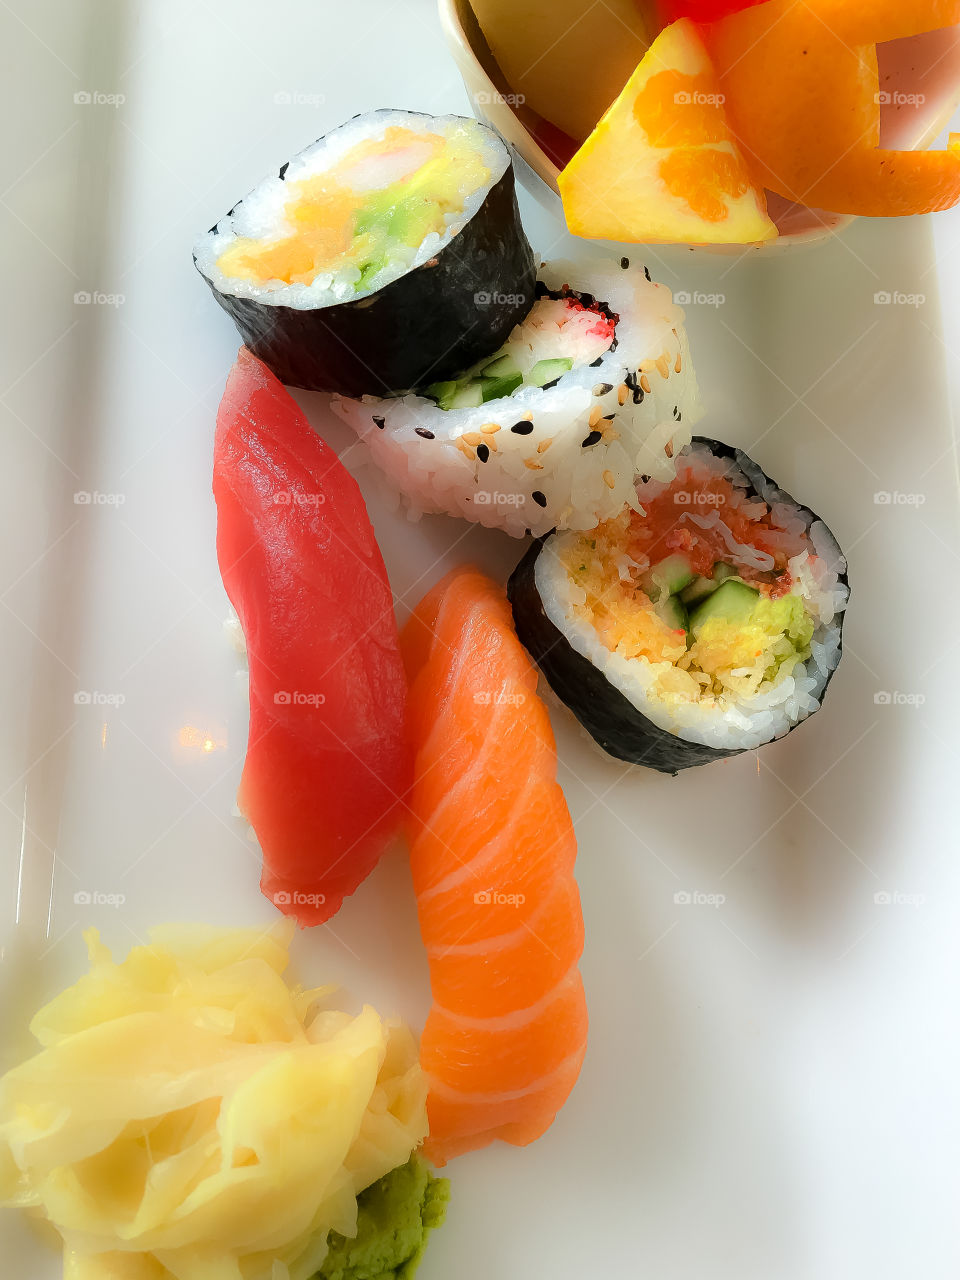 Japanese plate of sushi with salmon sashimi, maki, California roll